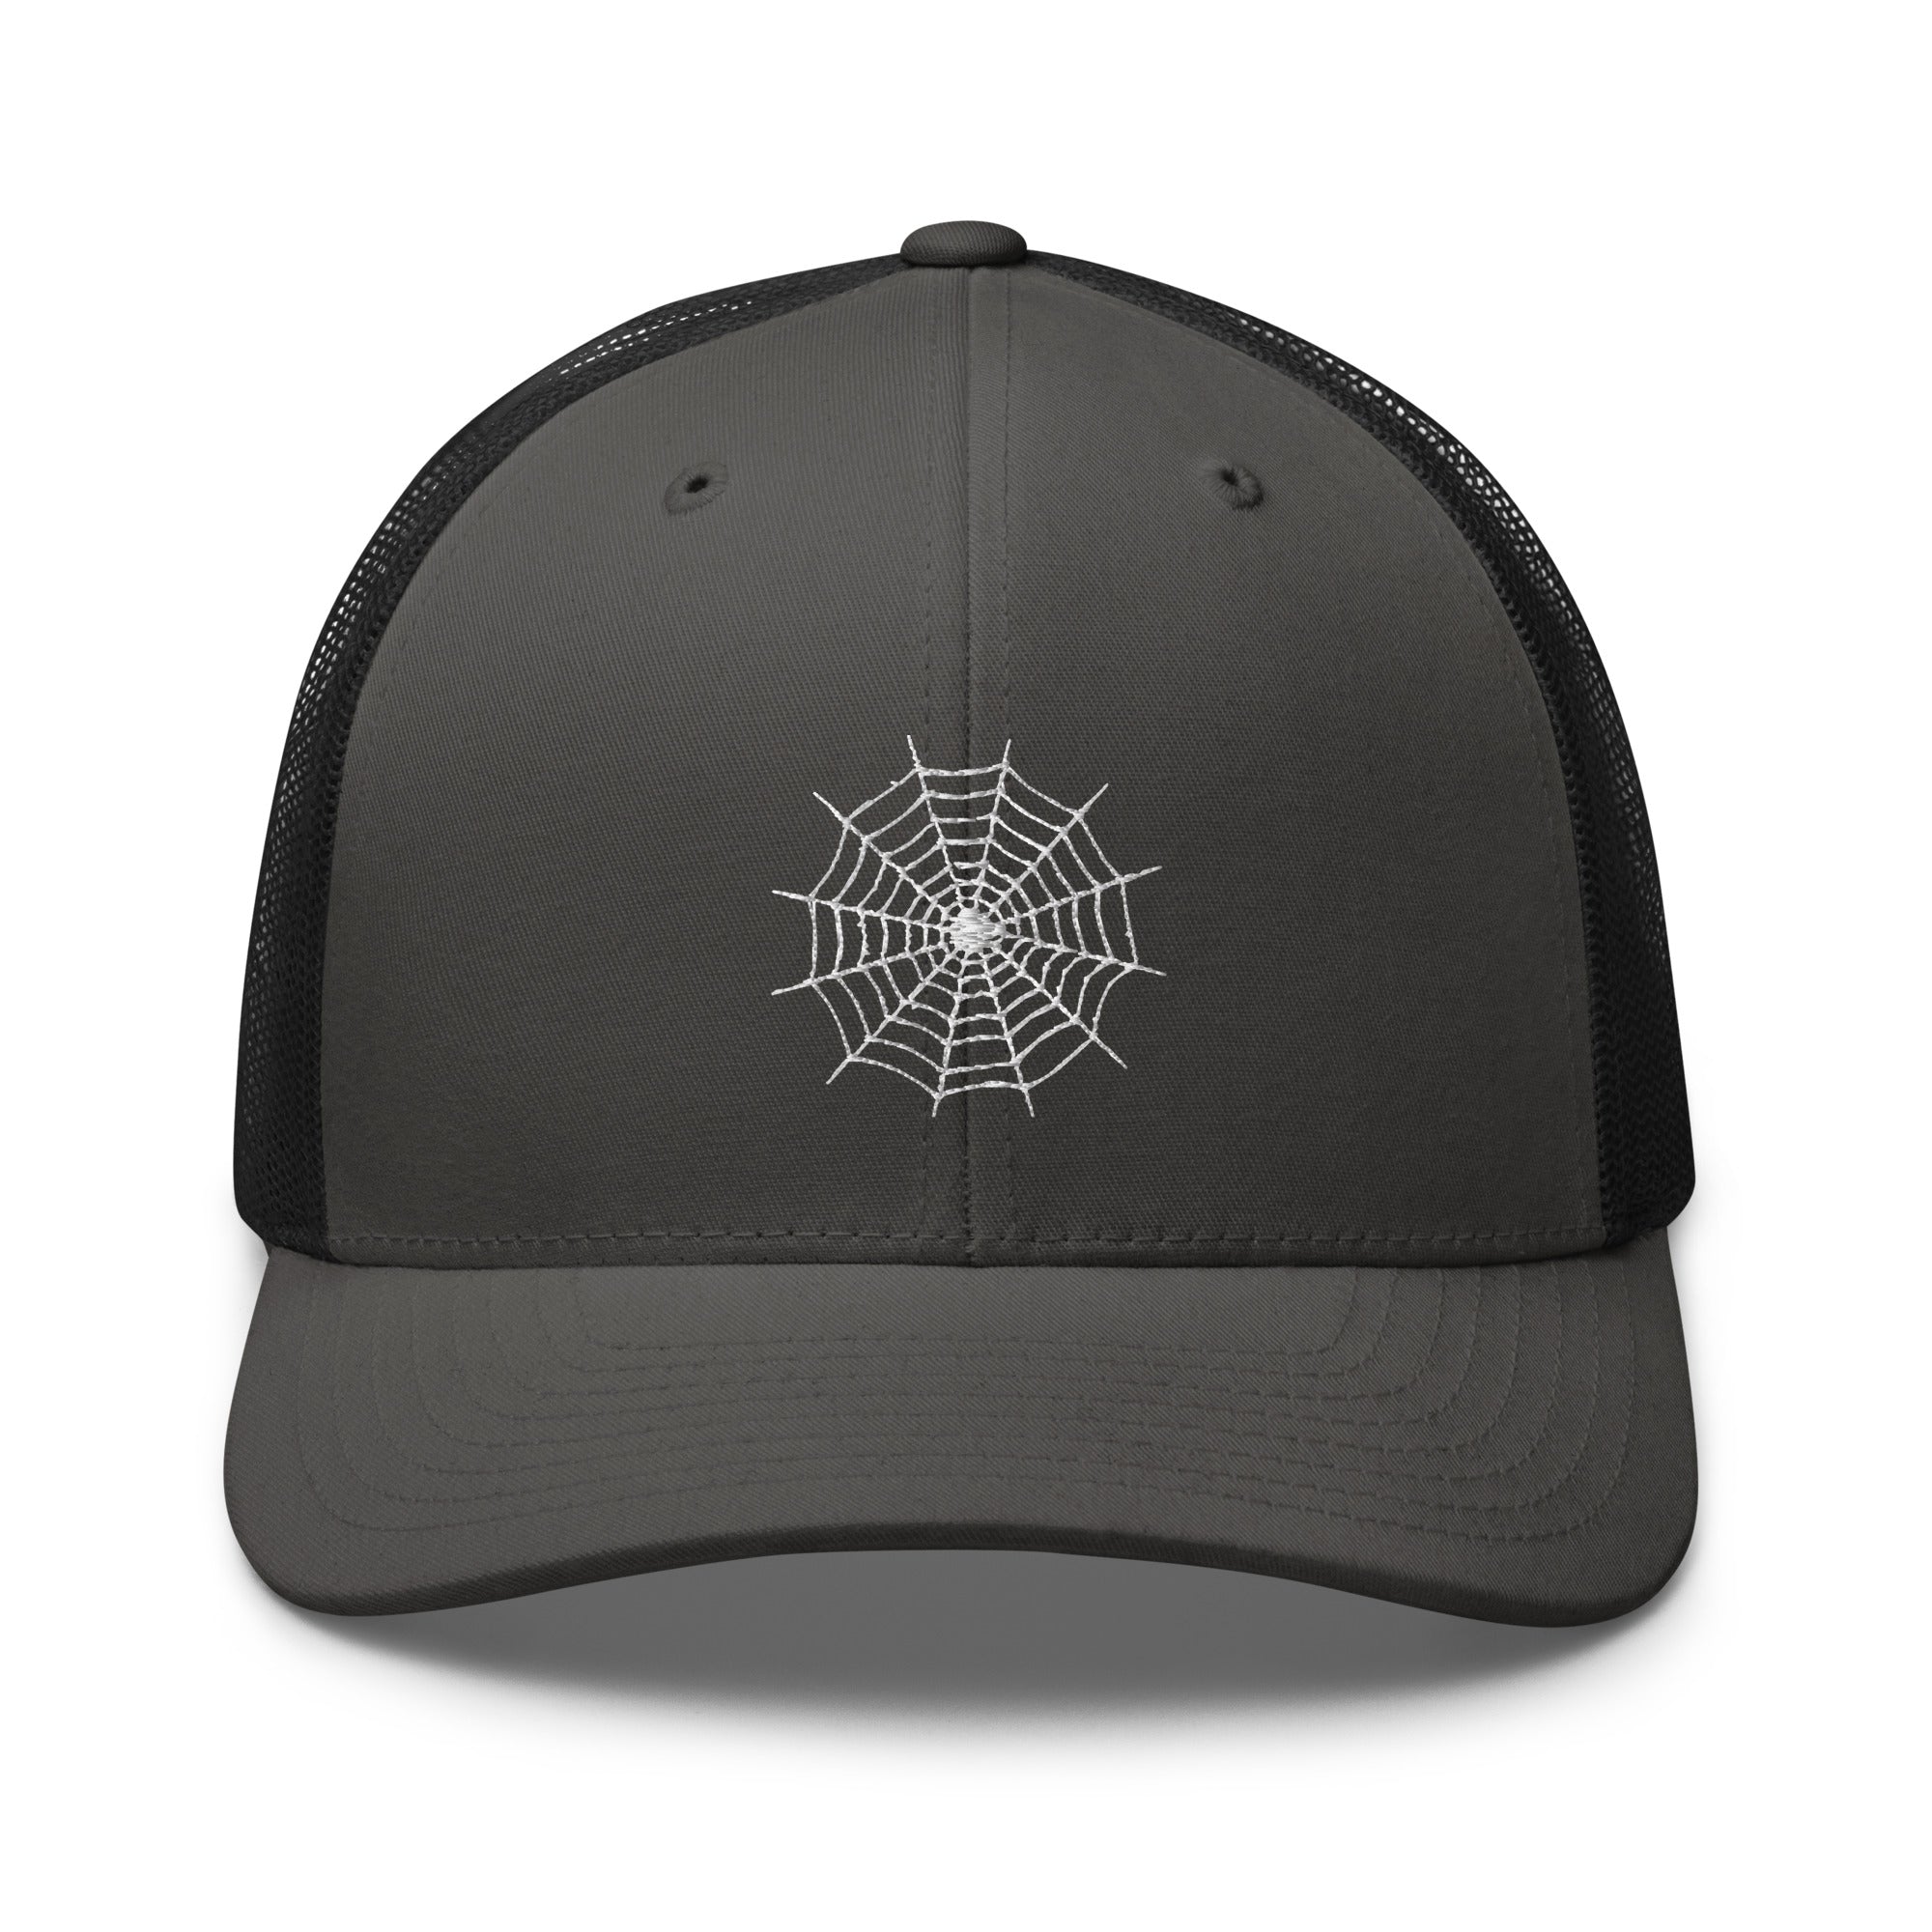 Creepy Spiderweb Halloween Cobweb Embroidered Trucker Cap Snapback Hat